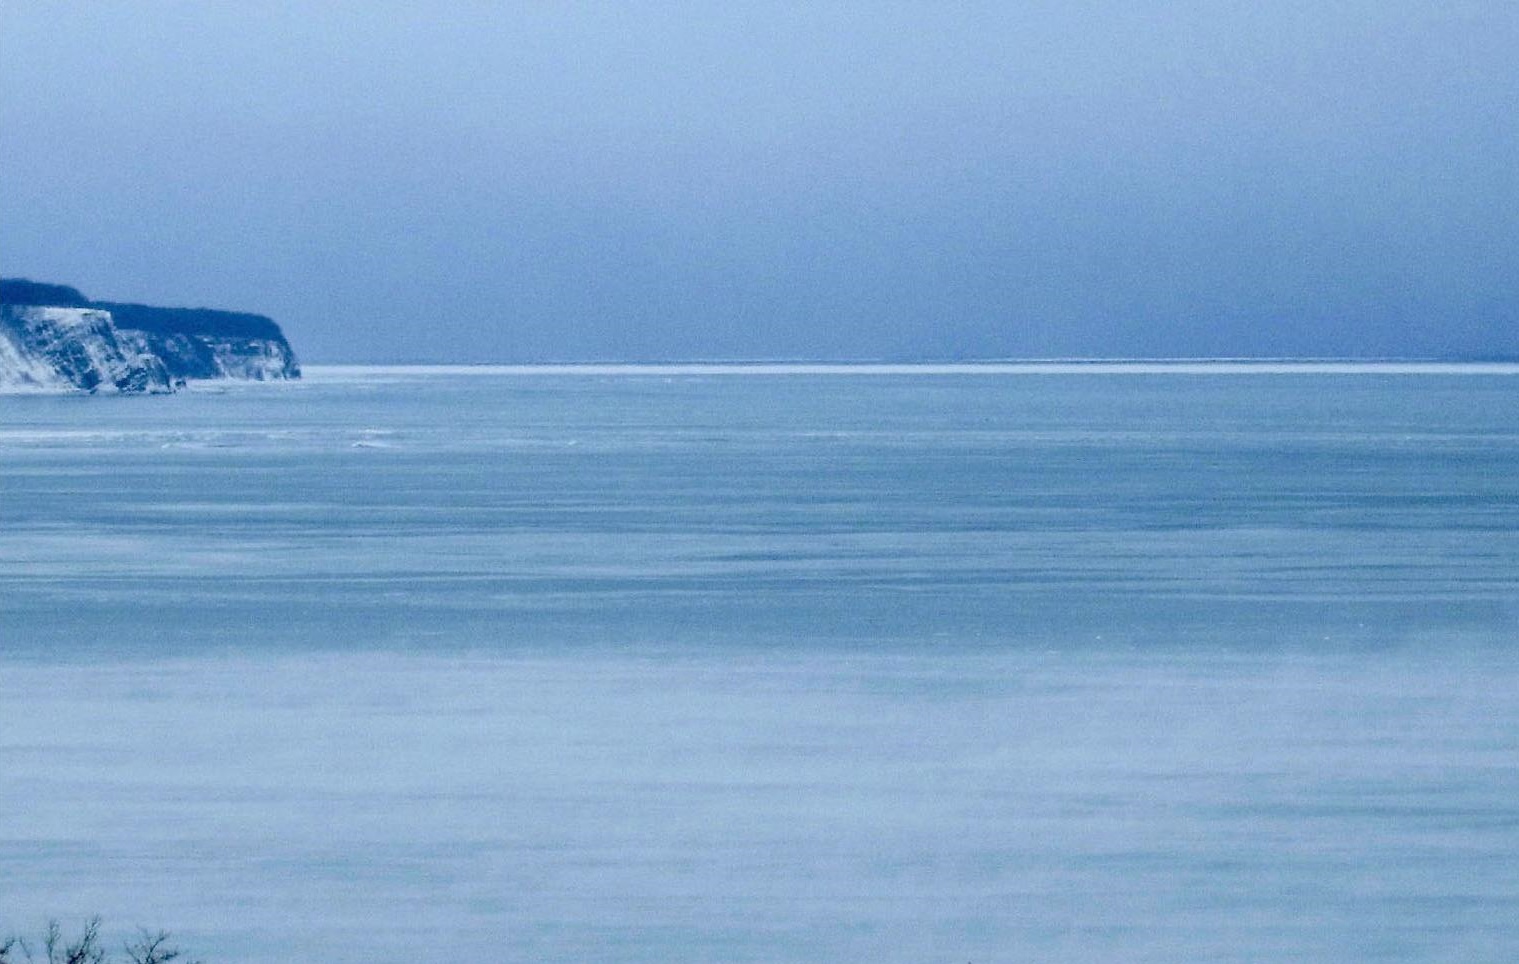 Sea Of Okhotsk Drift Ice Finally Spotted Off Hokkaido 19 Days Later